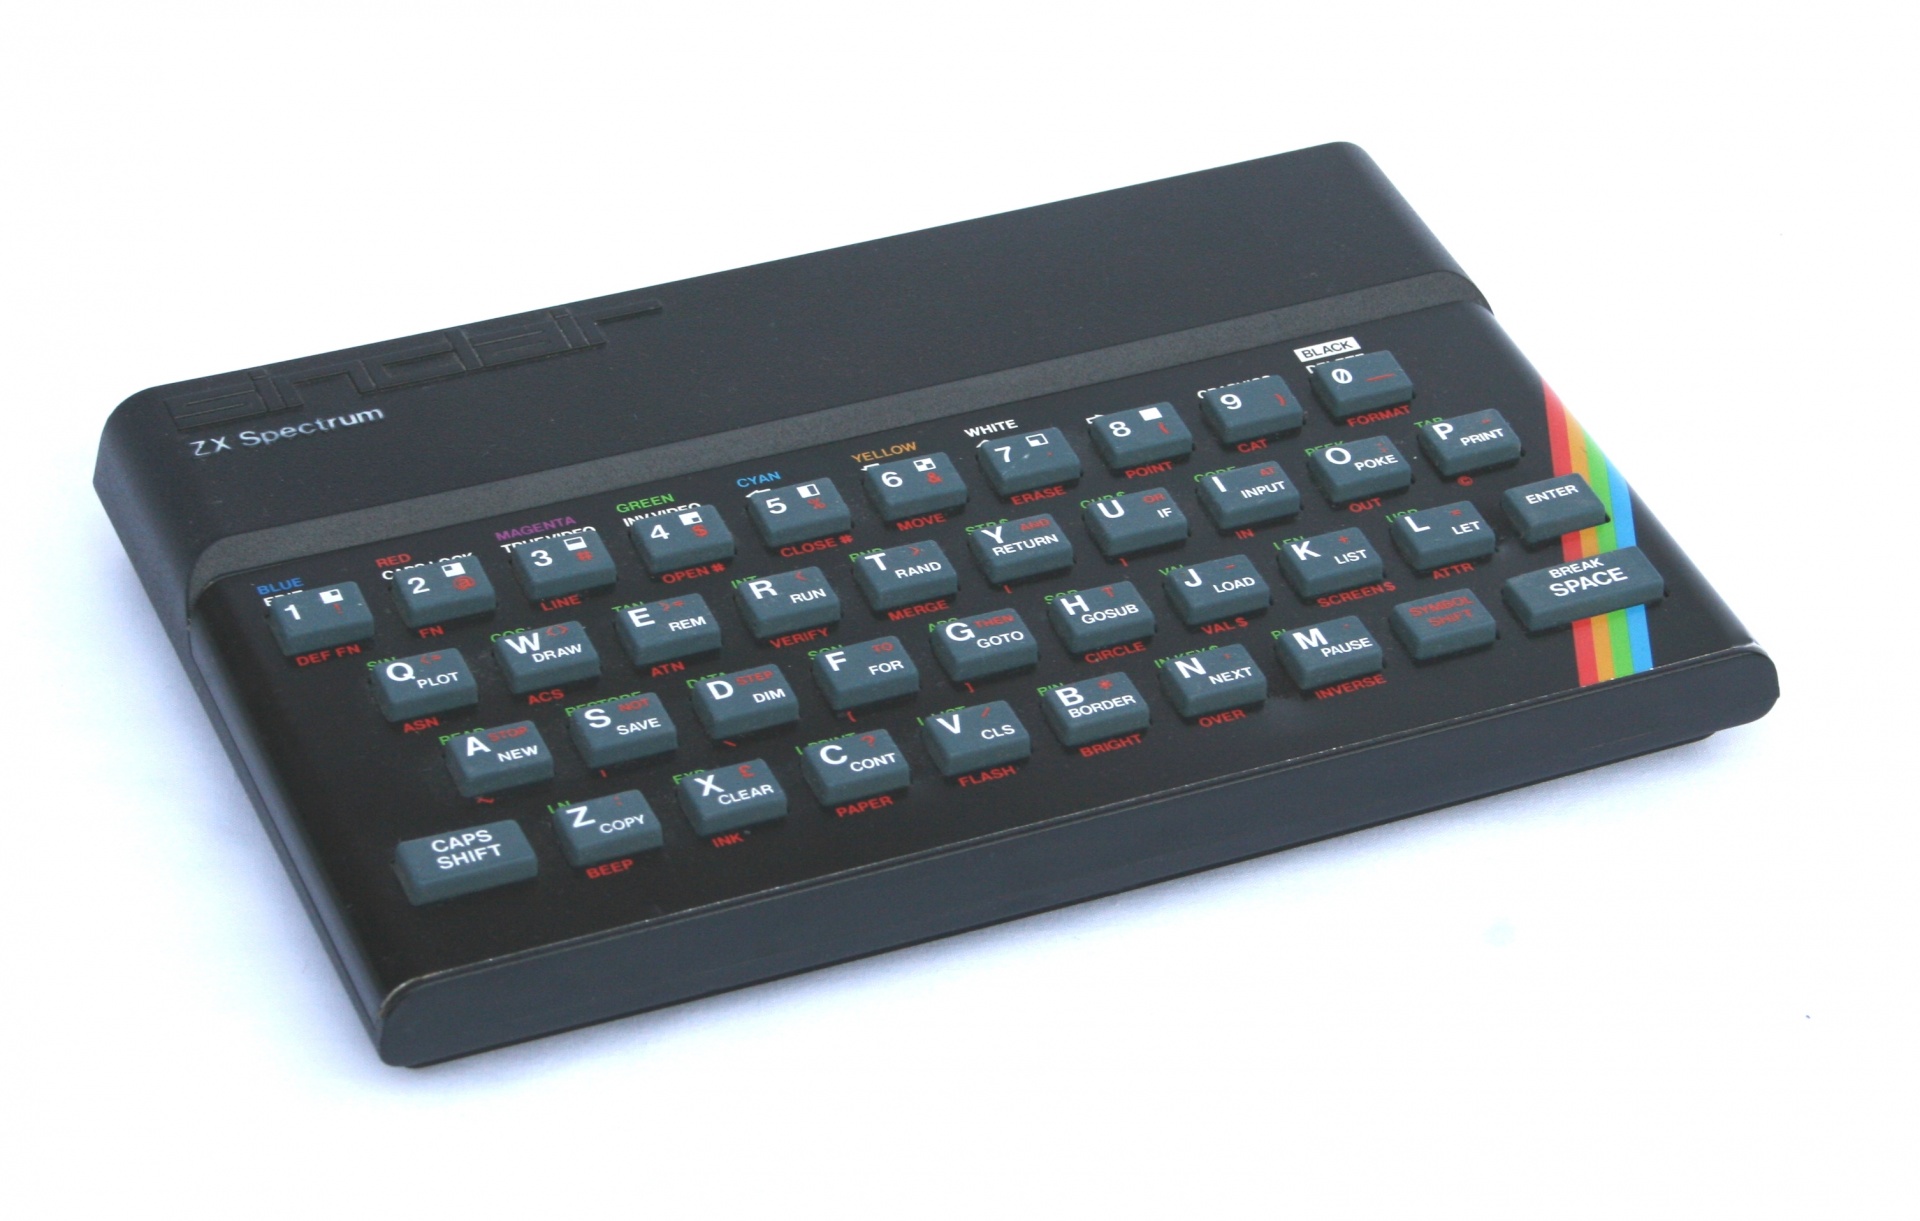 ZX Spectrum 48k